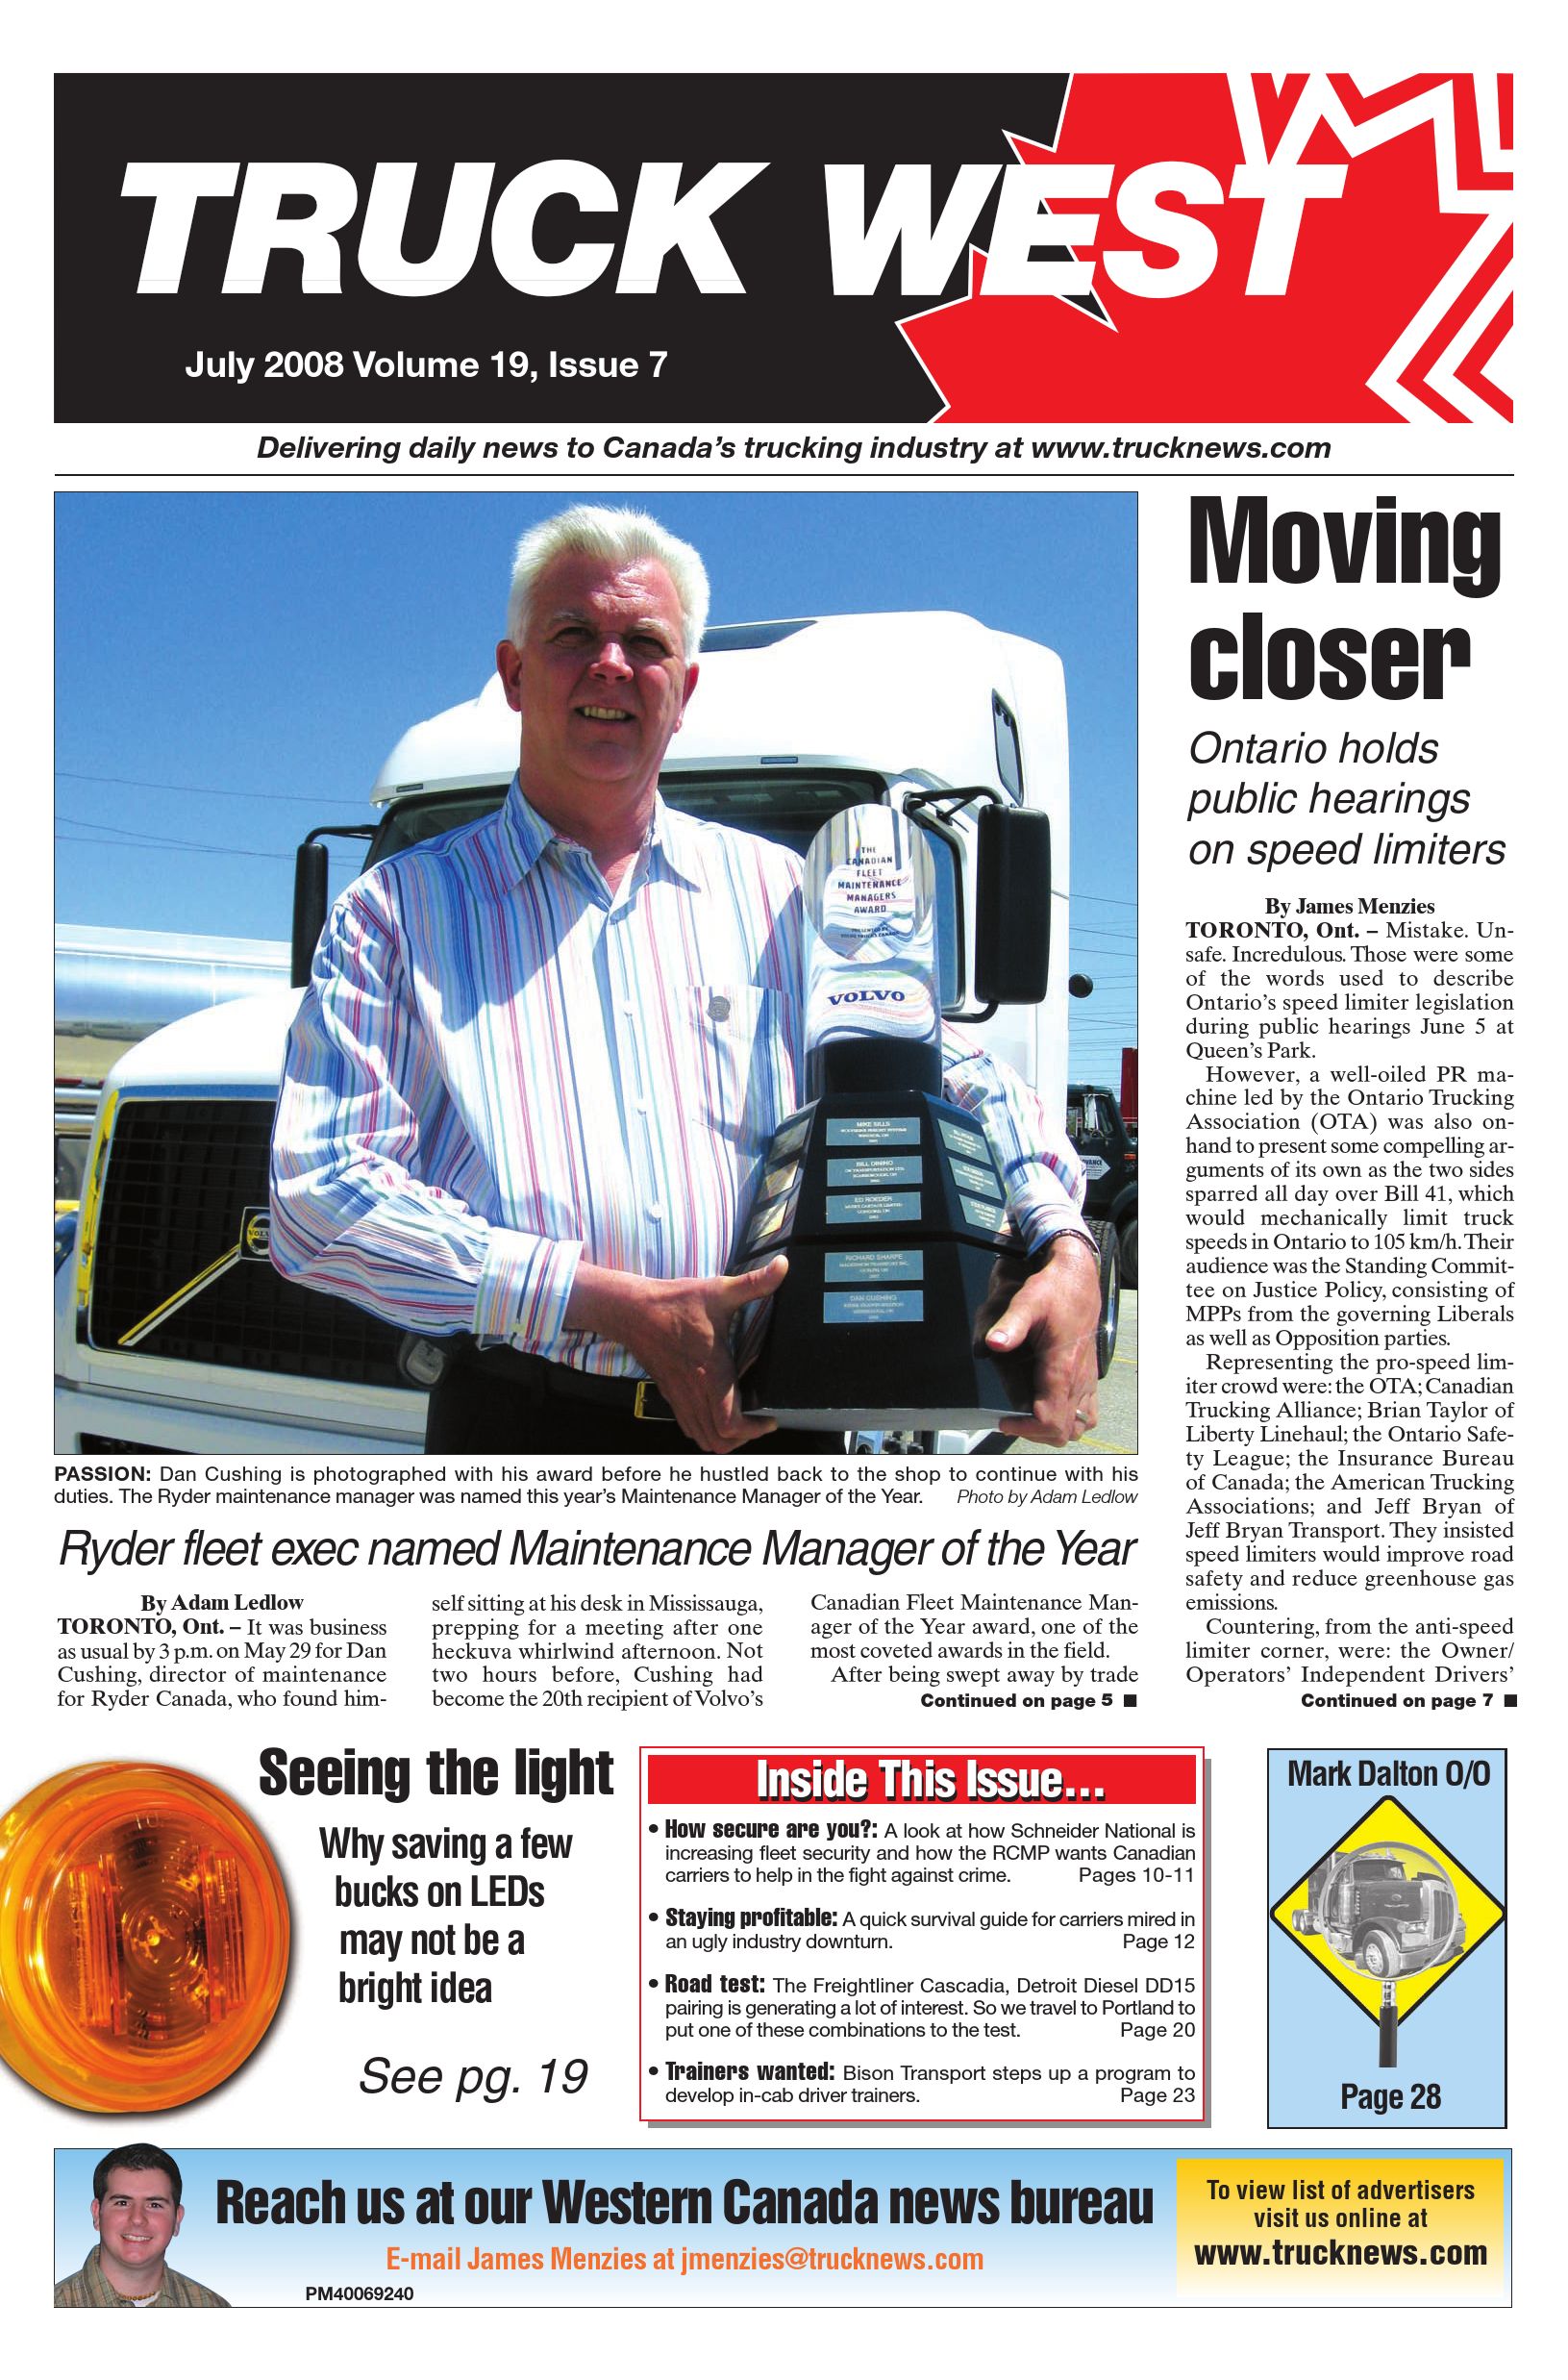 Truck News West – July 2008